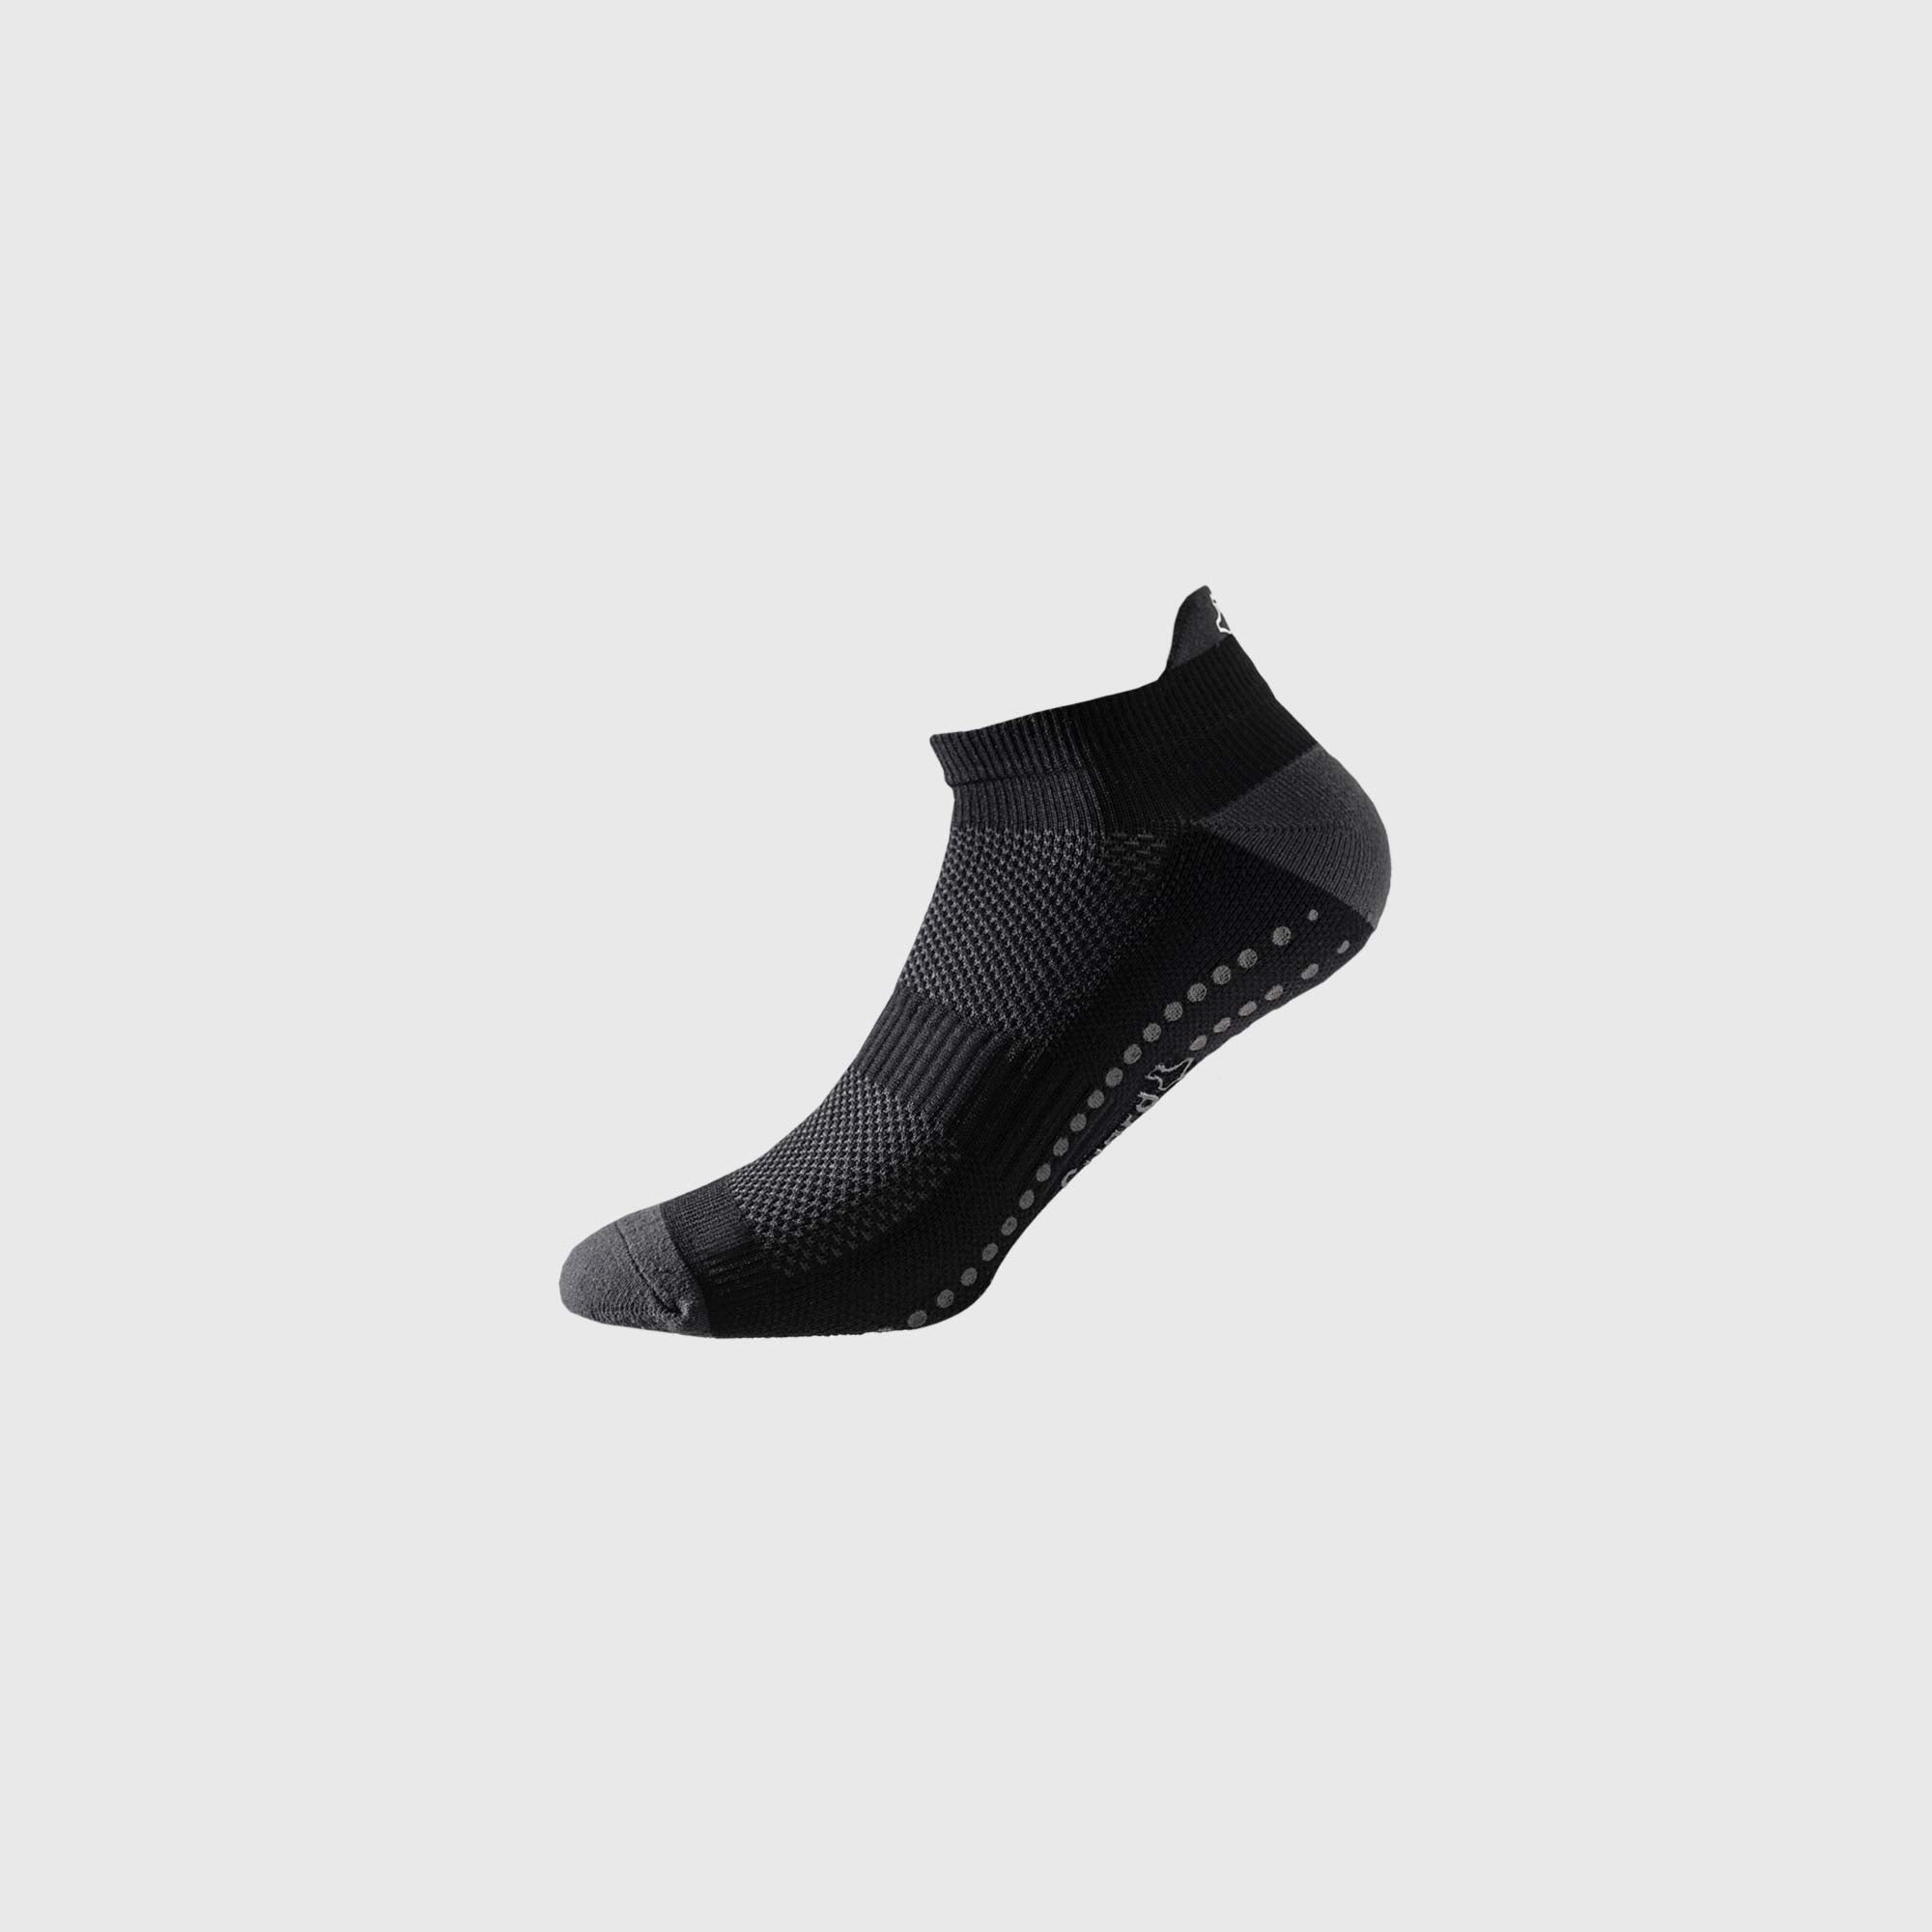 Liiteguard SHORT-GRIP SOCK Short socks BLACK